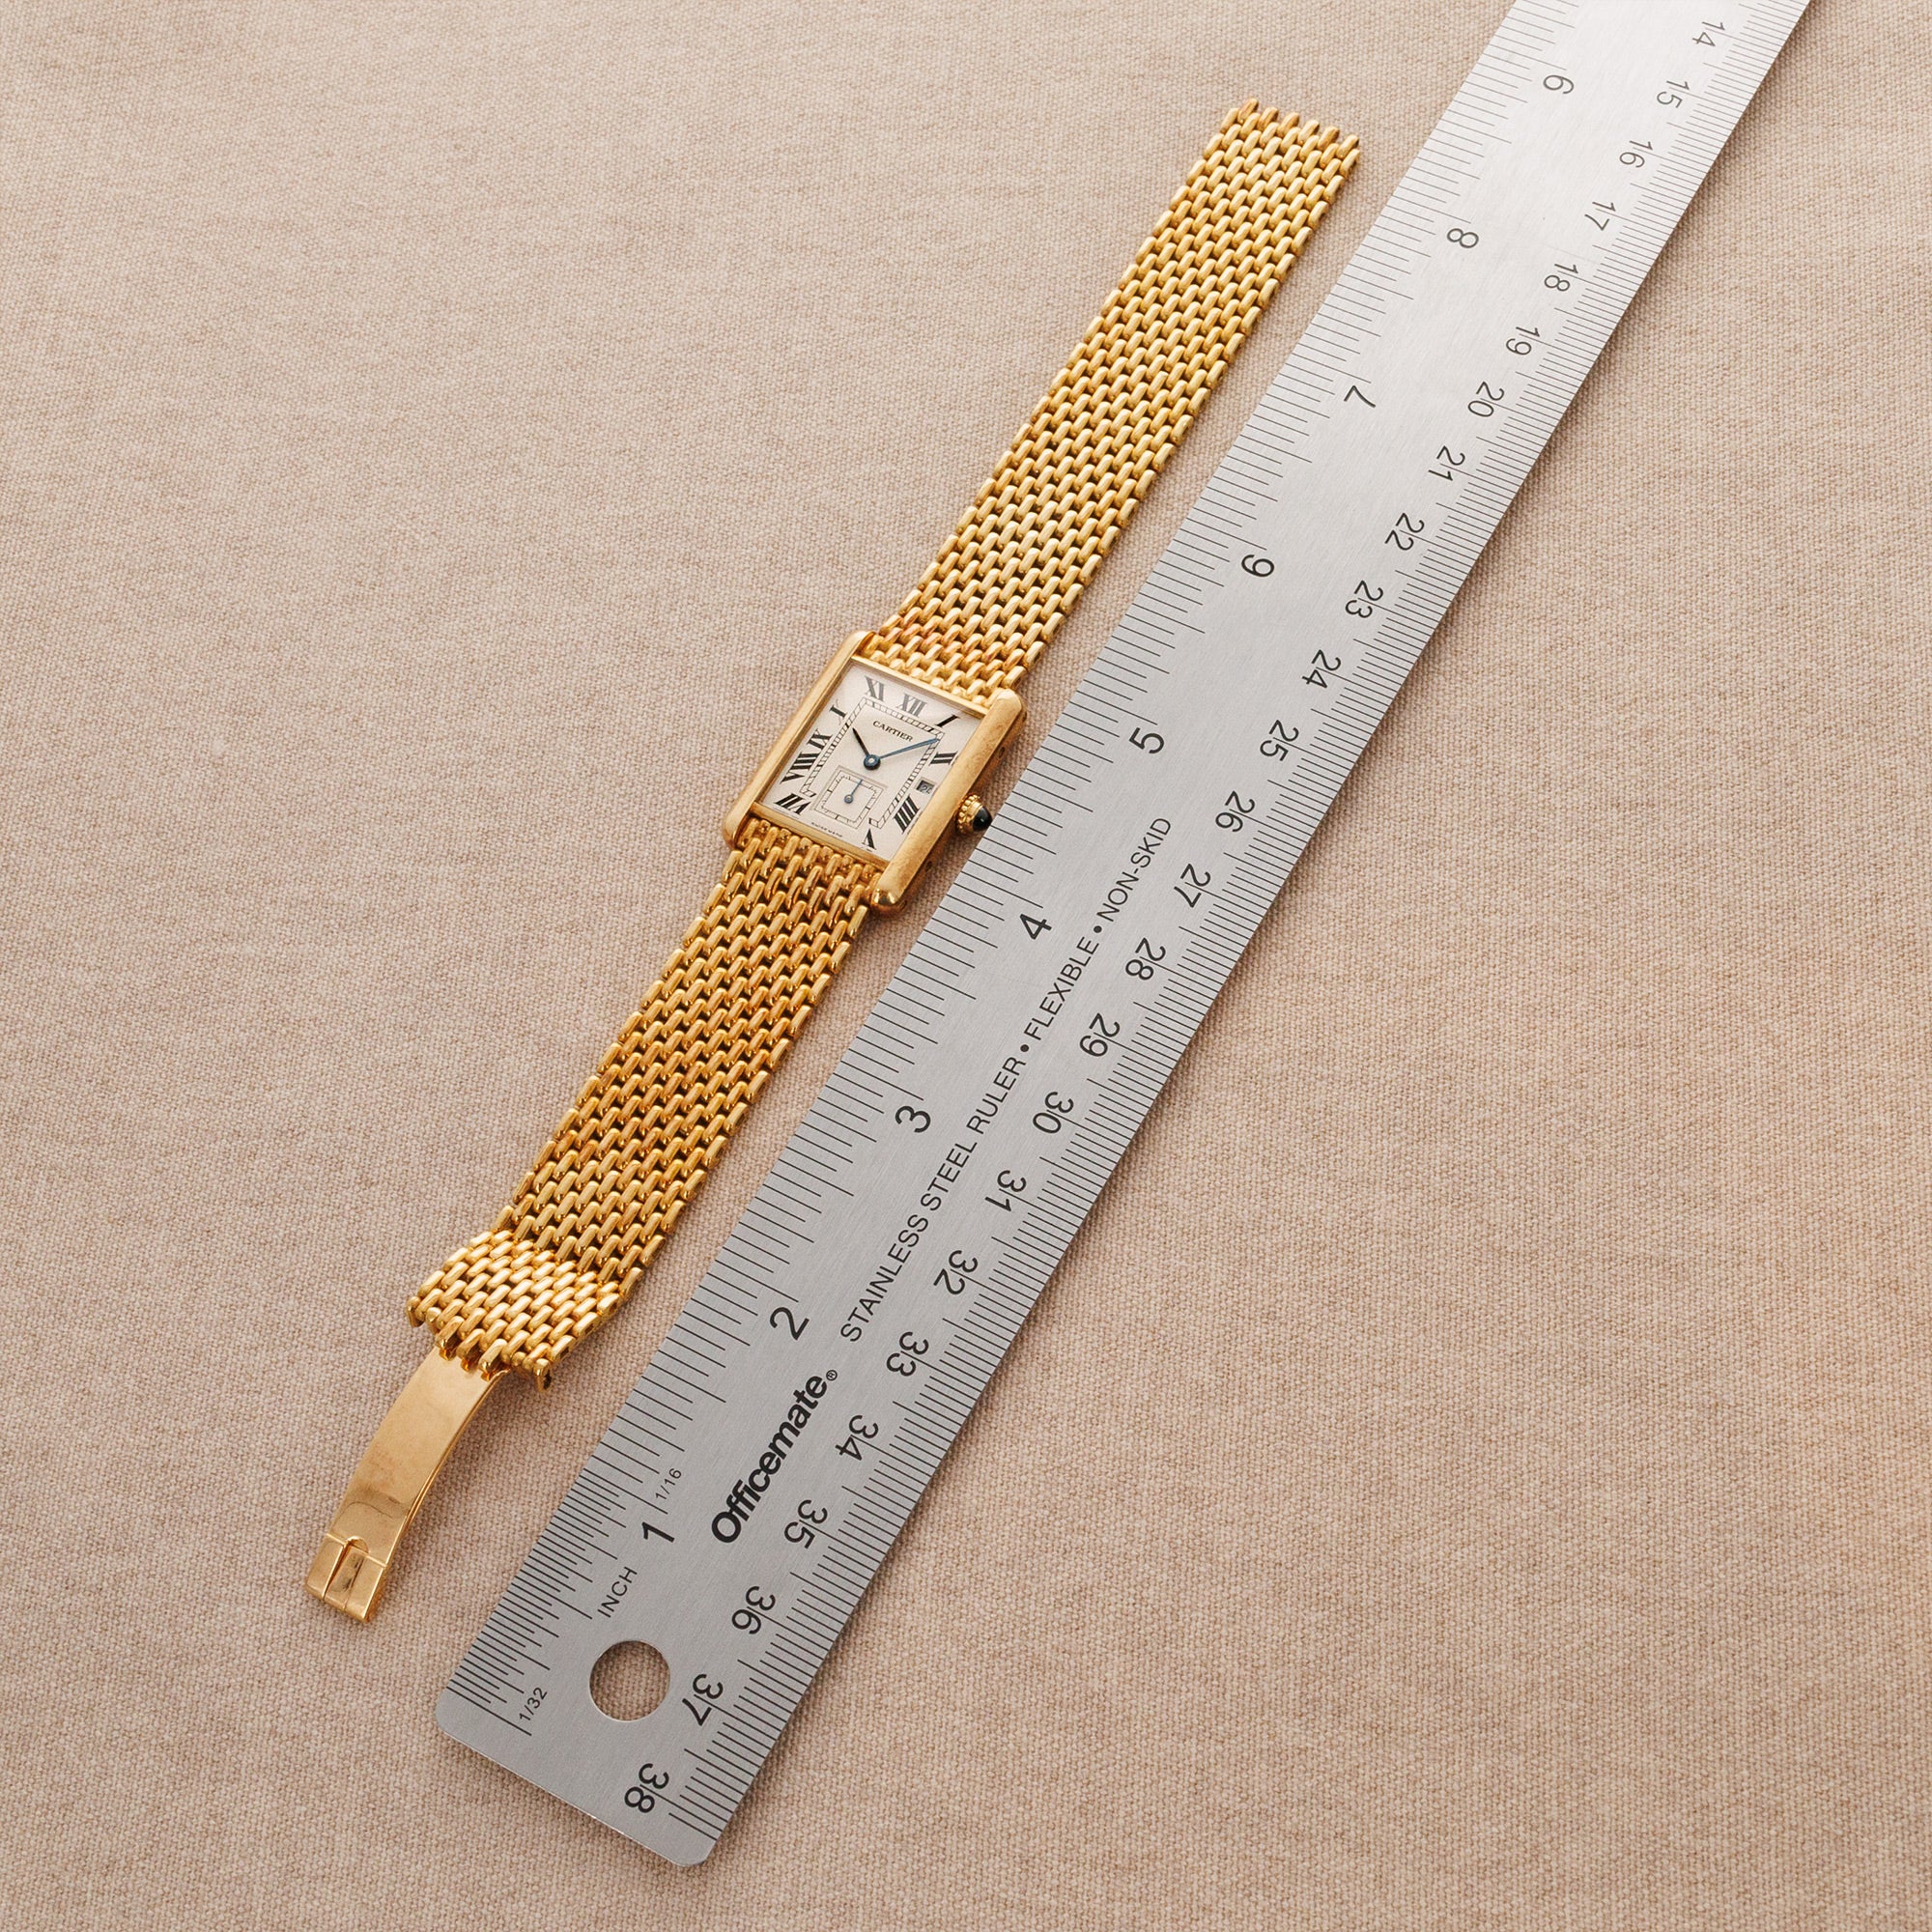 Cartier - Cartier Yellow Gold Tank Louis Ref. 8110 on a Bracelet - The Keystone Watches